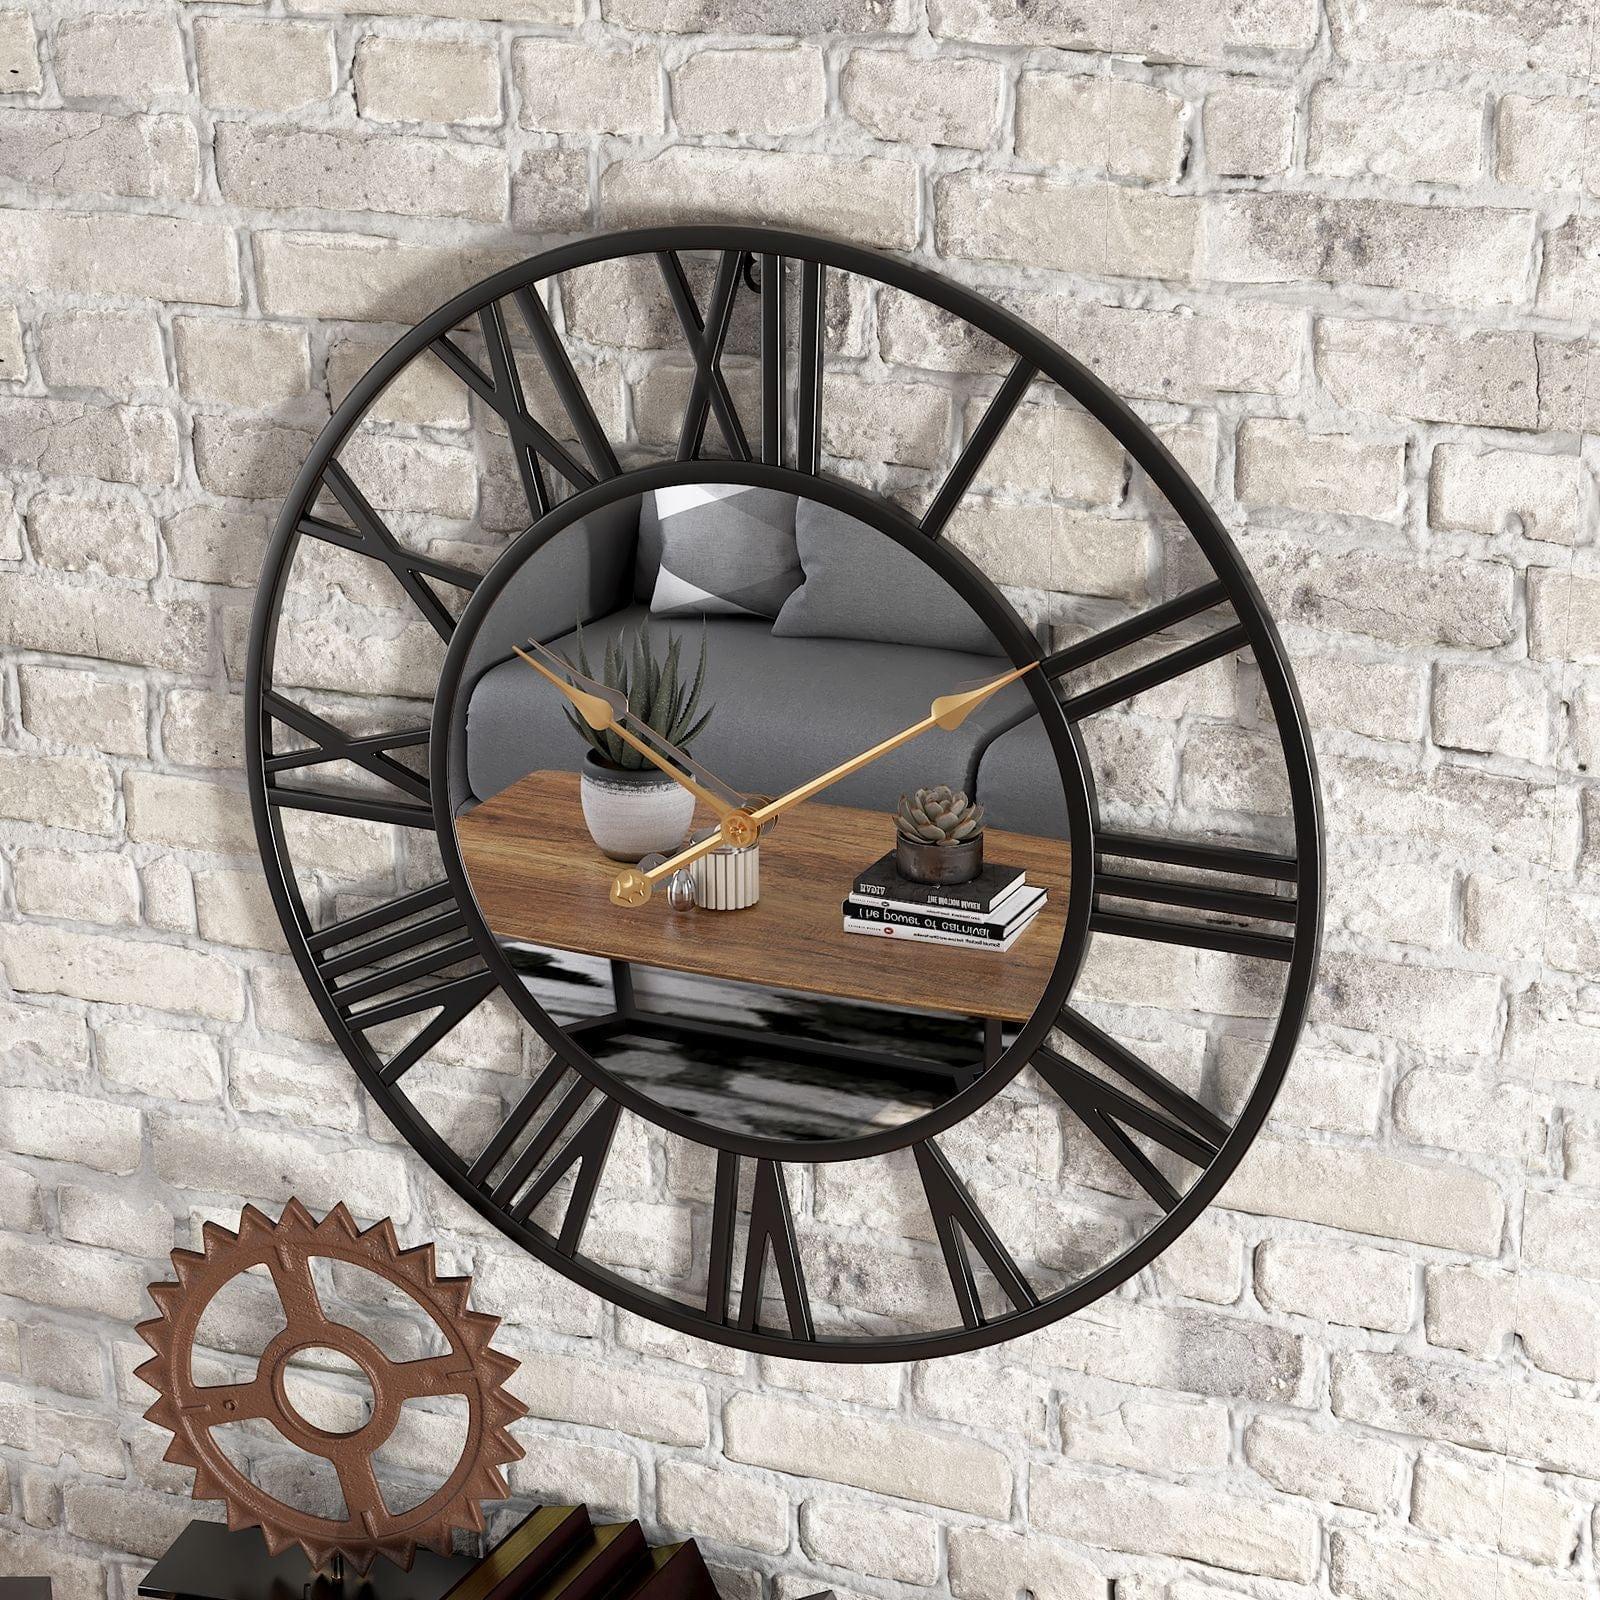 Shop 0 black / 40cm Round Wall Clock Metal 15mm Large Golden Silent Wall Clock Modern Design Mirror Clocks Living Room Home Decoration Battery A Mademoiselle Home Decor